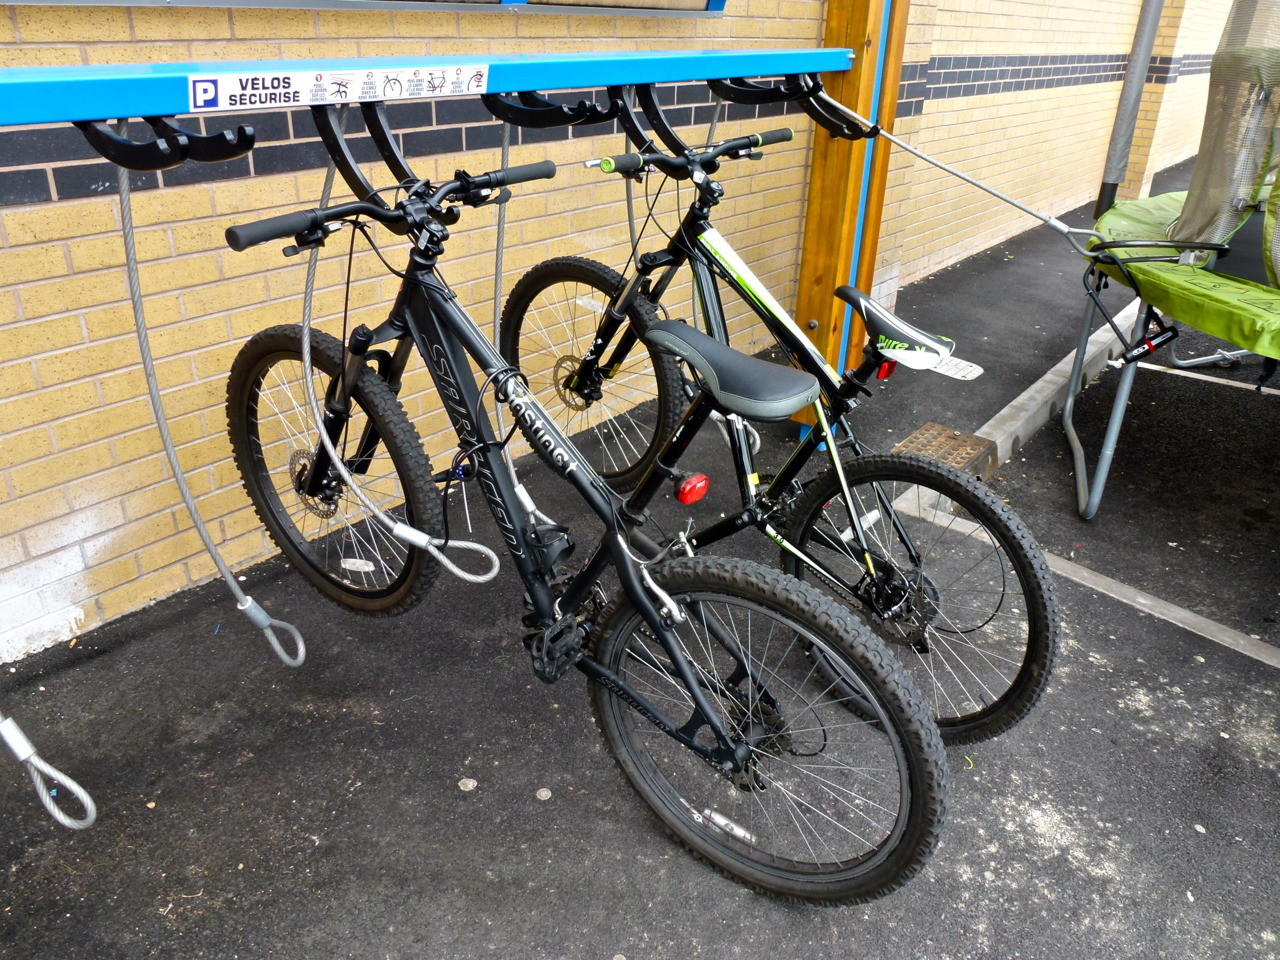 decathlon bike racks